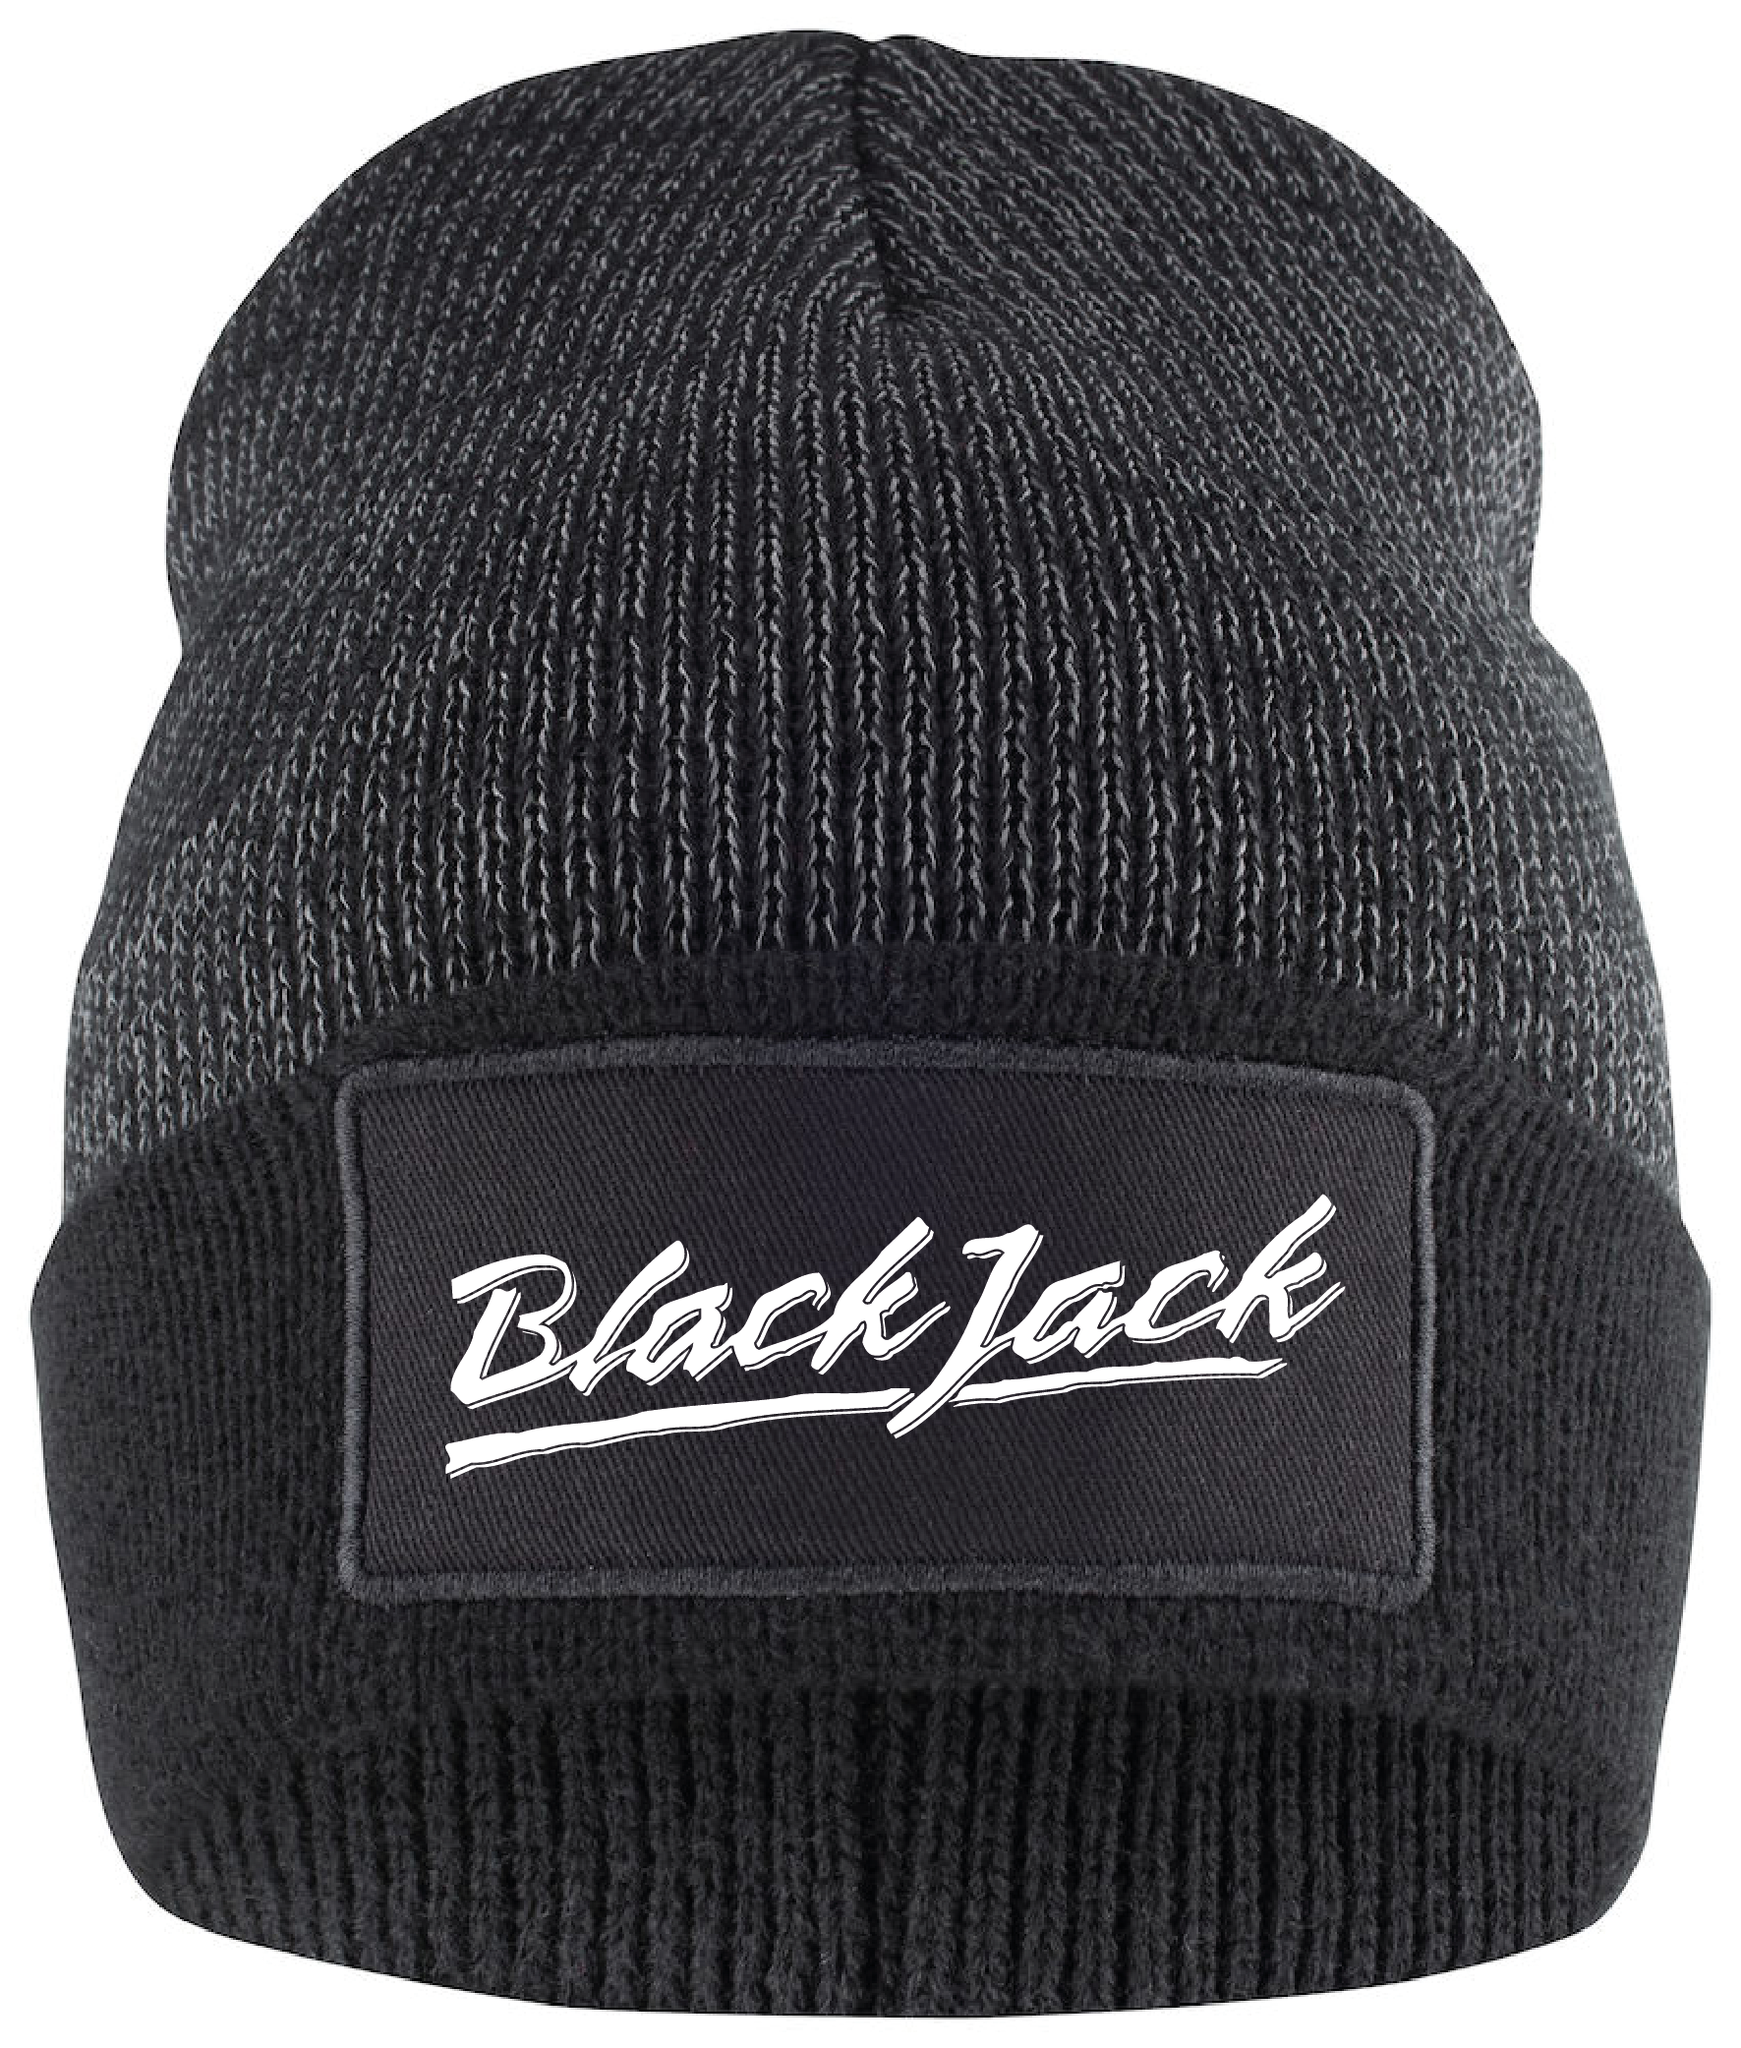 Reflexmössa "Black Jack"